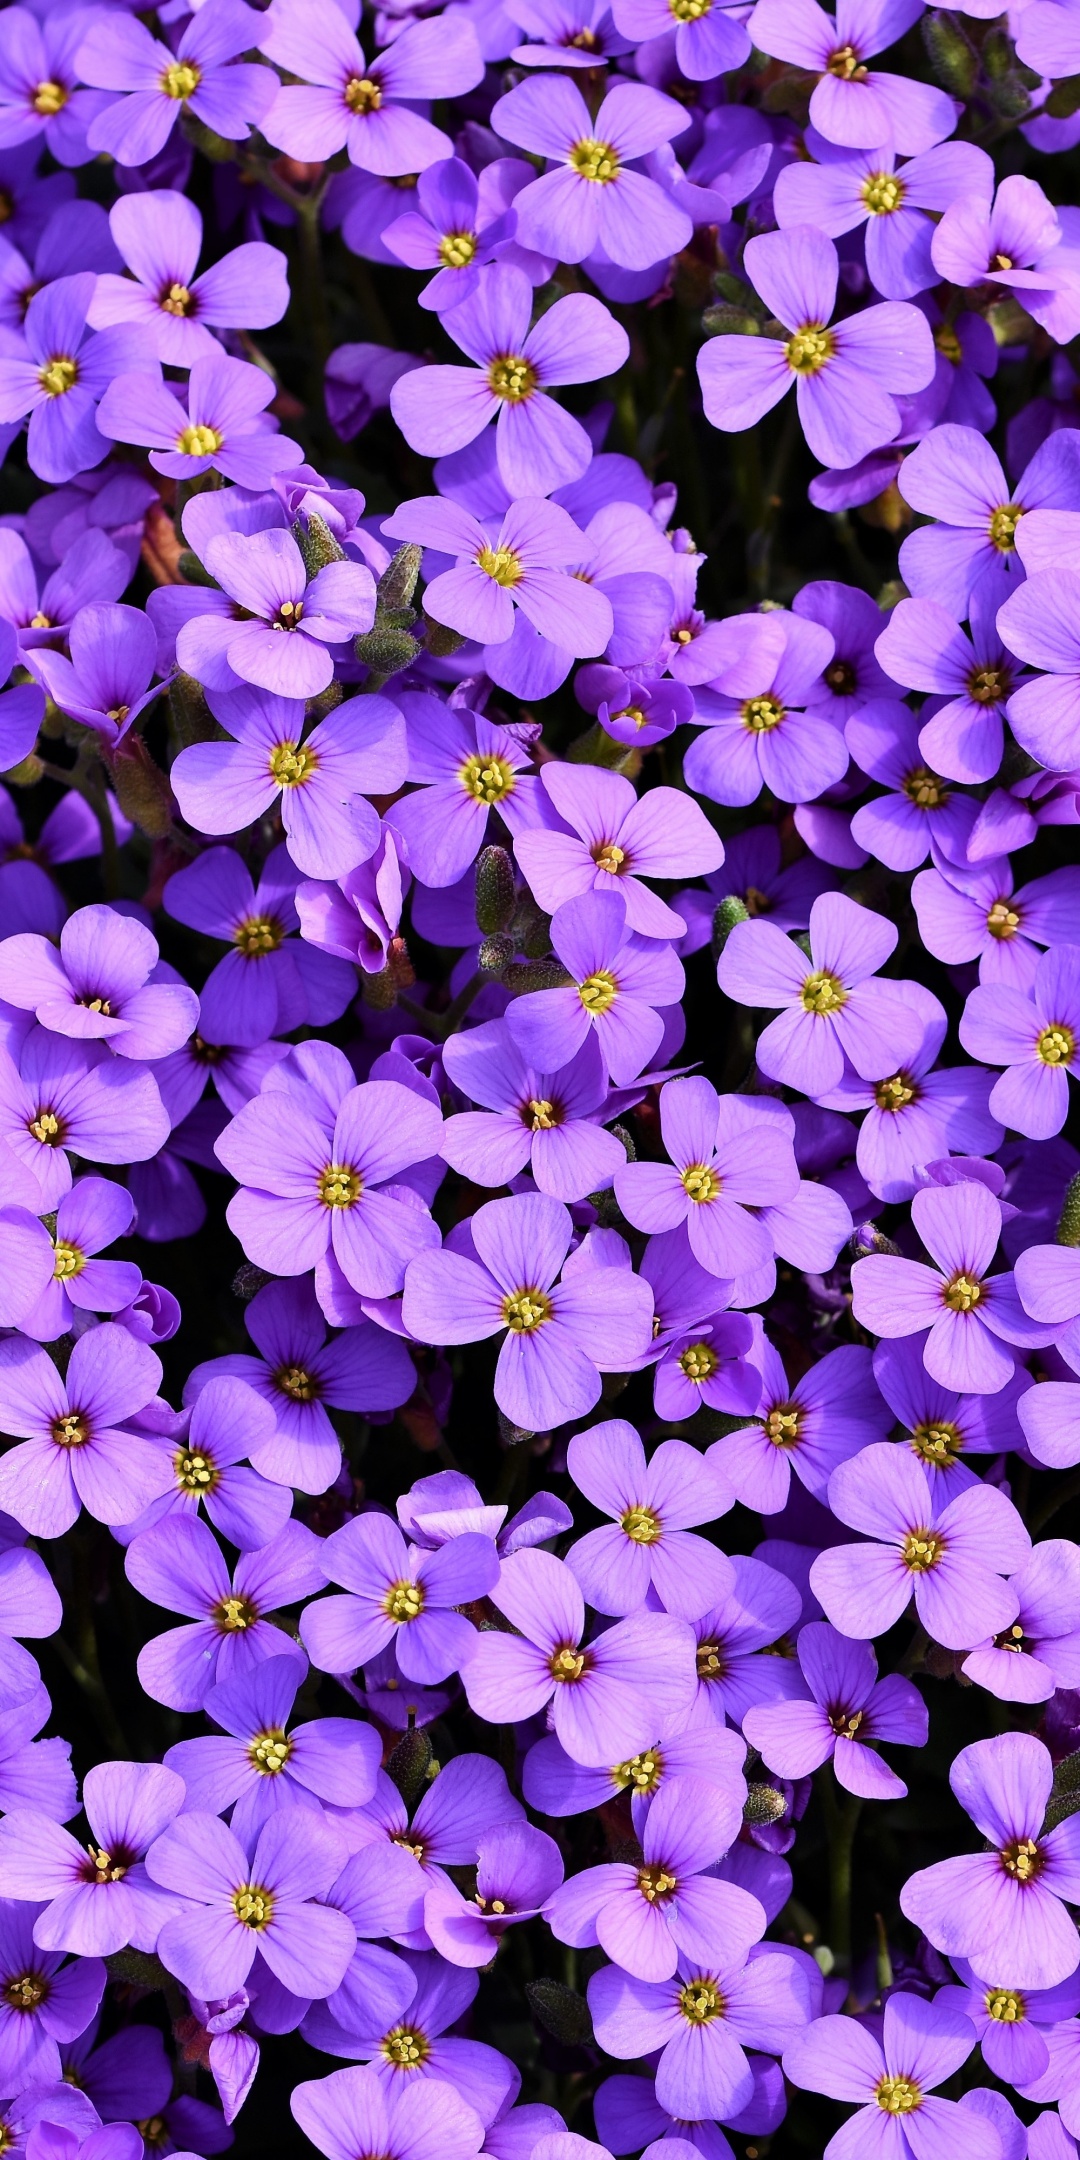 Aubrieta Wallpaper 4K, Violet Flowers, Blossom, Flowers Search Results